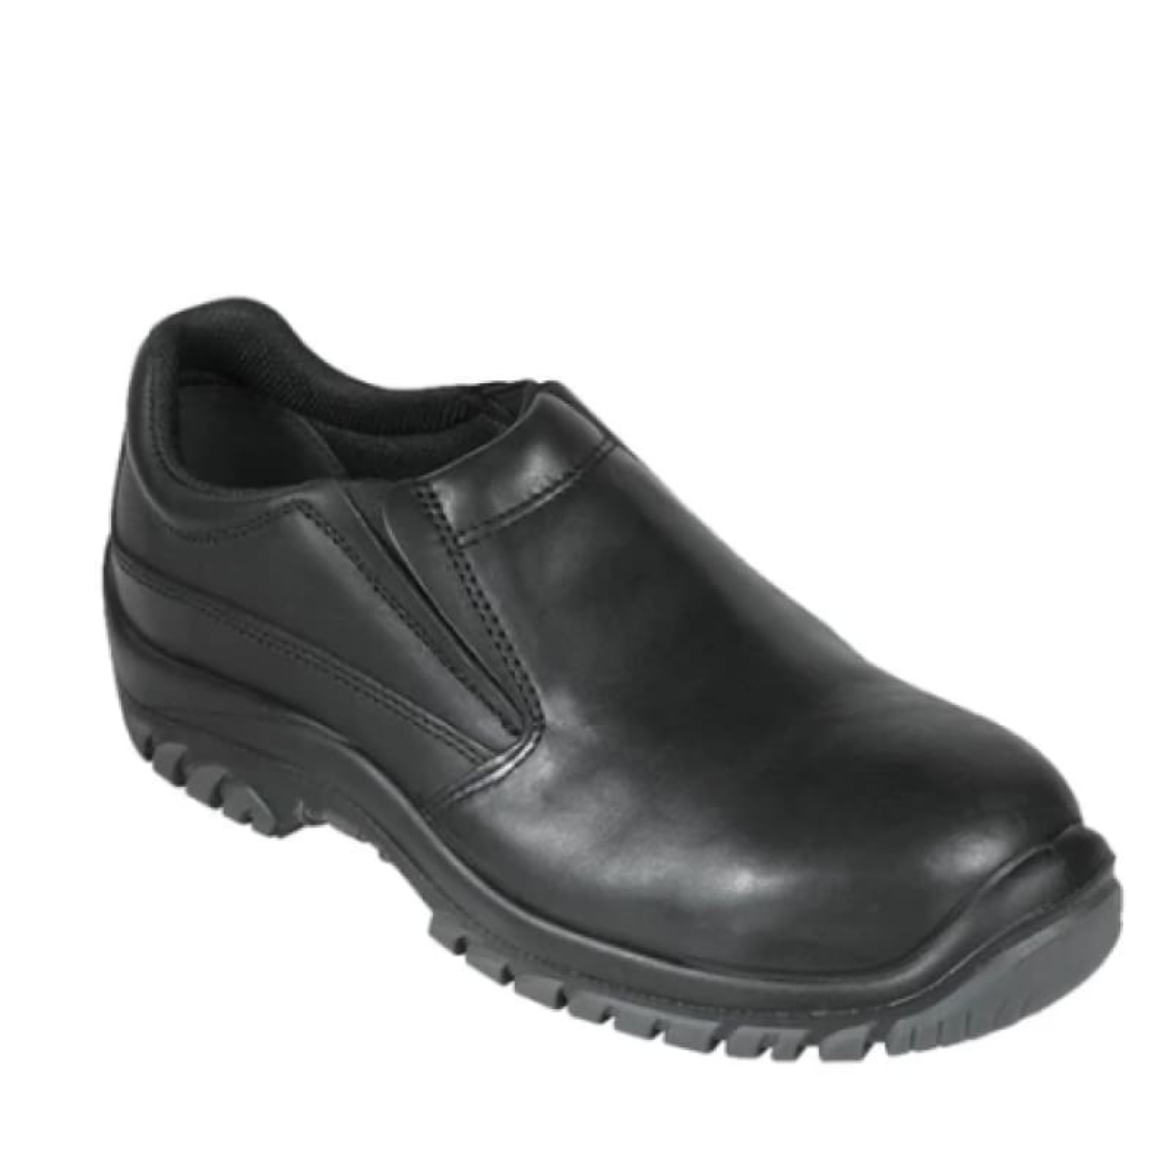 315085 Mongrel Boots, Safety Shoe, Slip-on | Workwear Direct Australia